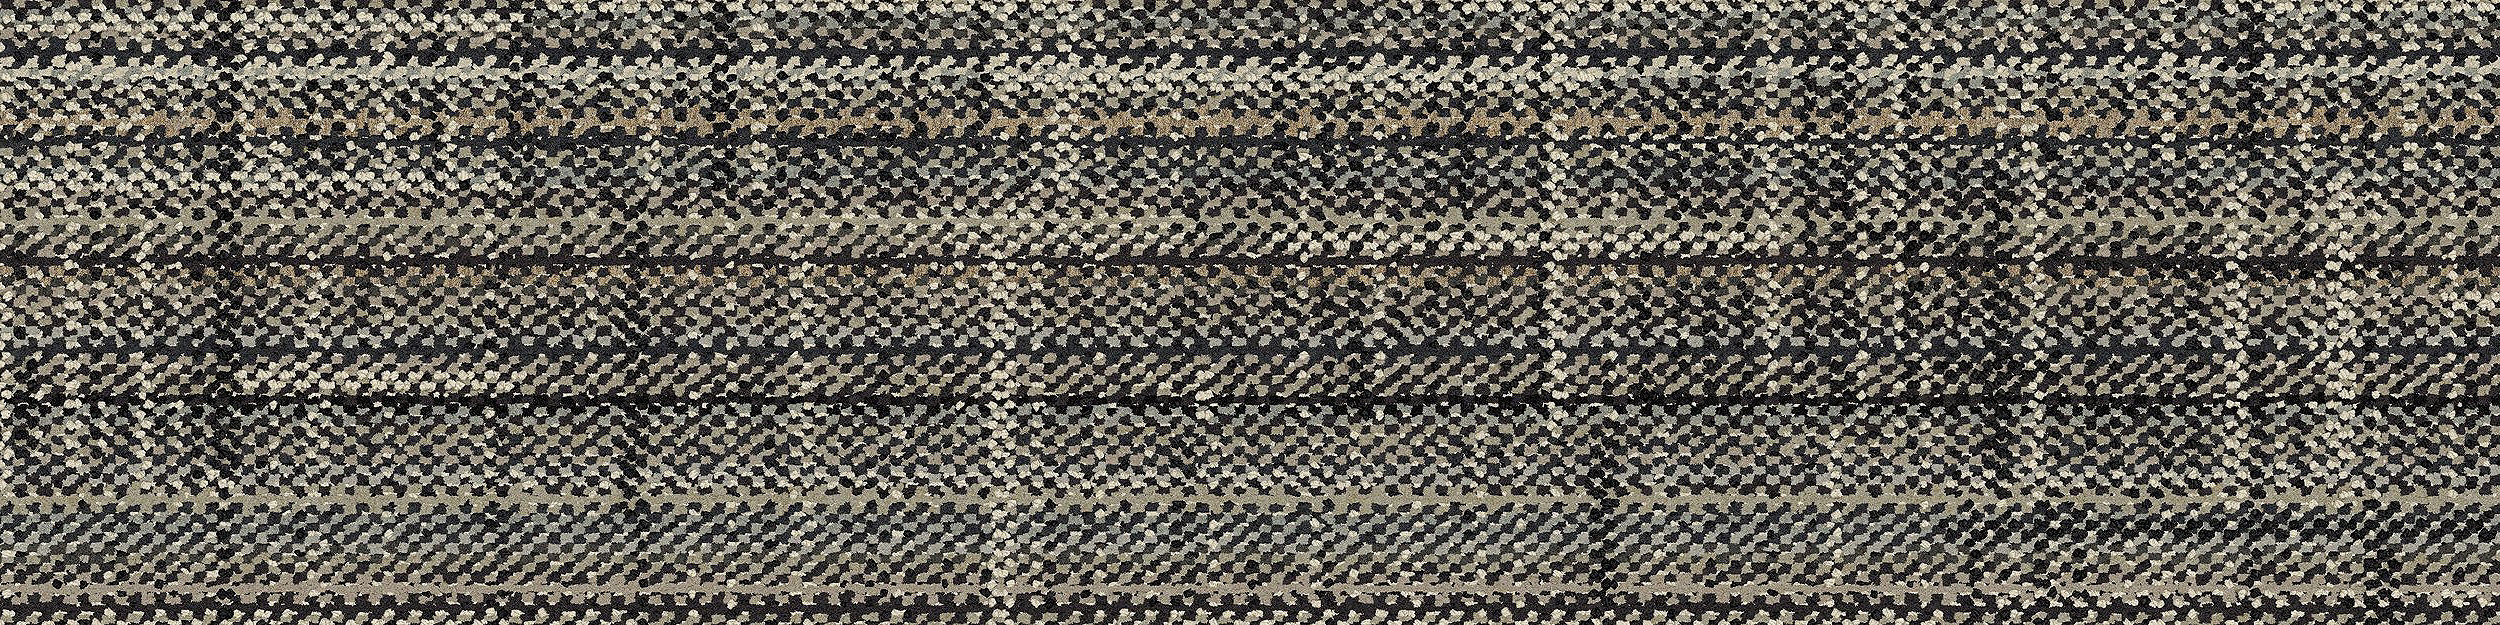 French Seams Carpet Tile In Chantilly numéro d’image 7